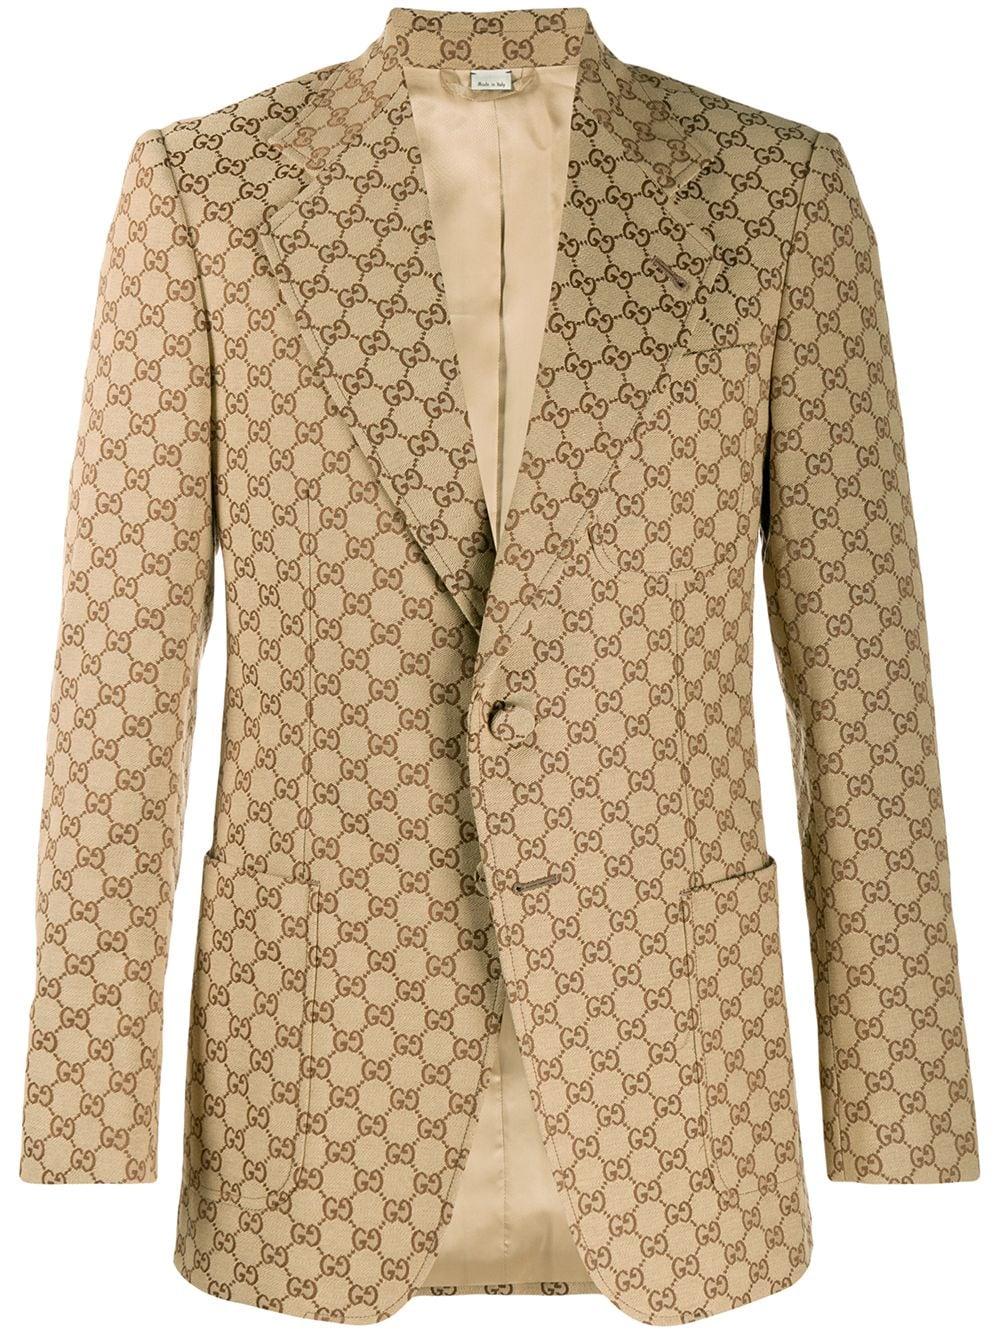 Gucci Cotton GG Jacquard Blazer for Men - Lyst